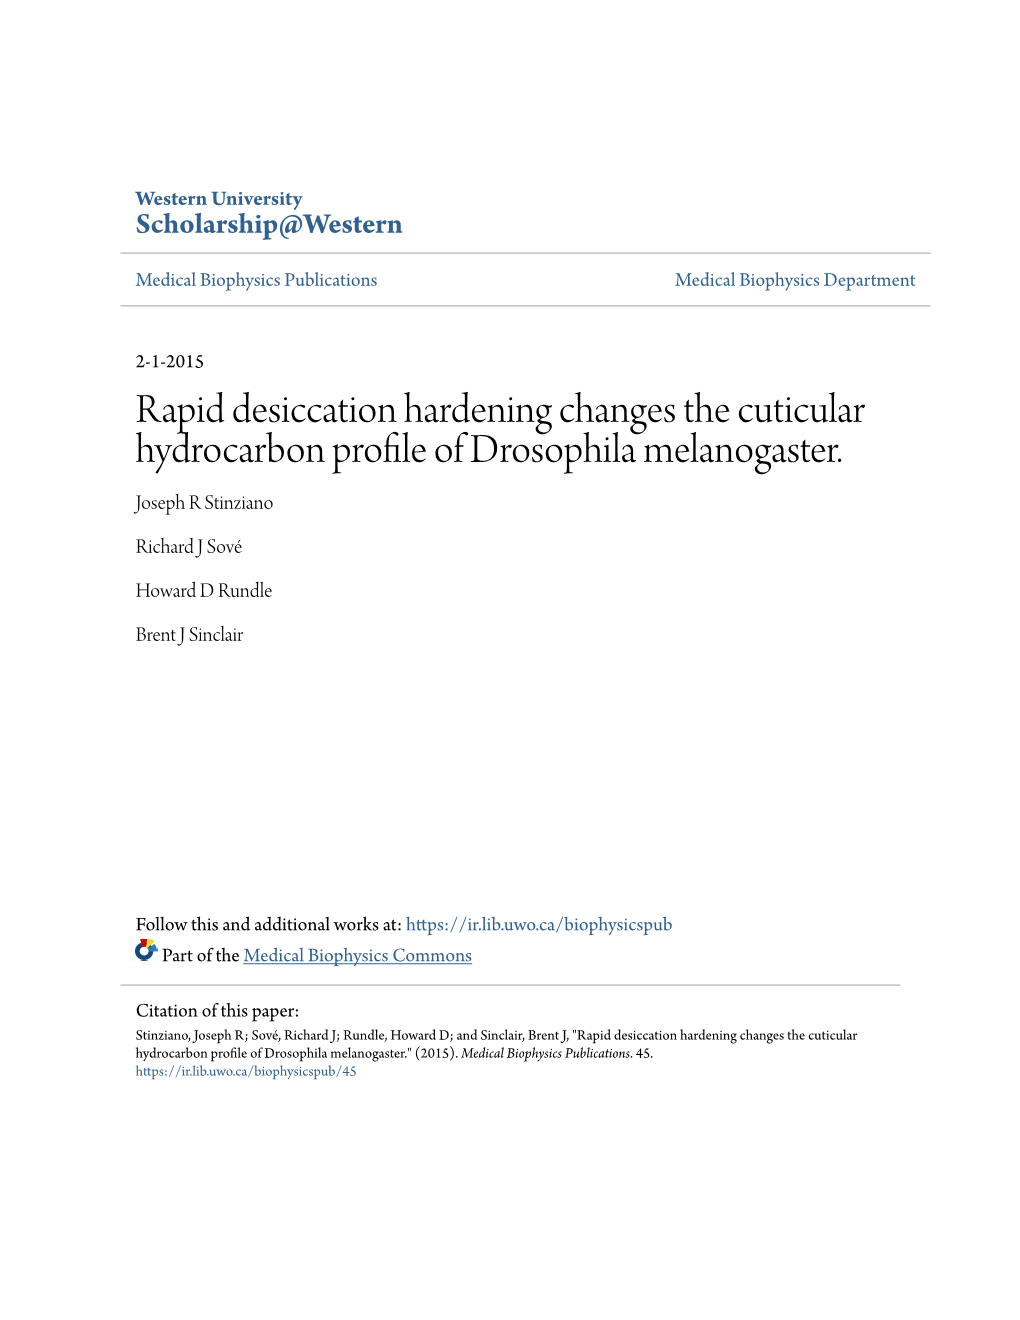 Rapid Desiccation Hardening Changes the Cuticular Hydrocarbon Profile of Drosophila Melanogaster